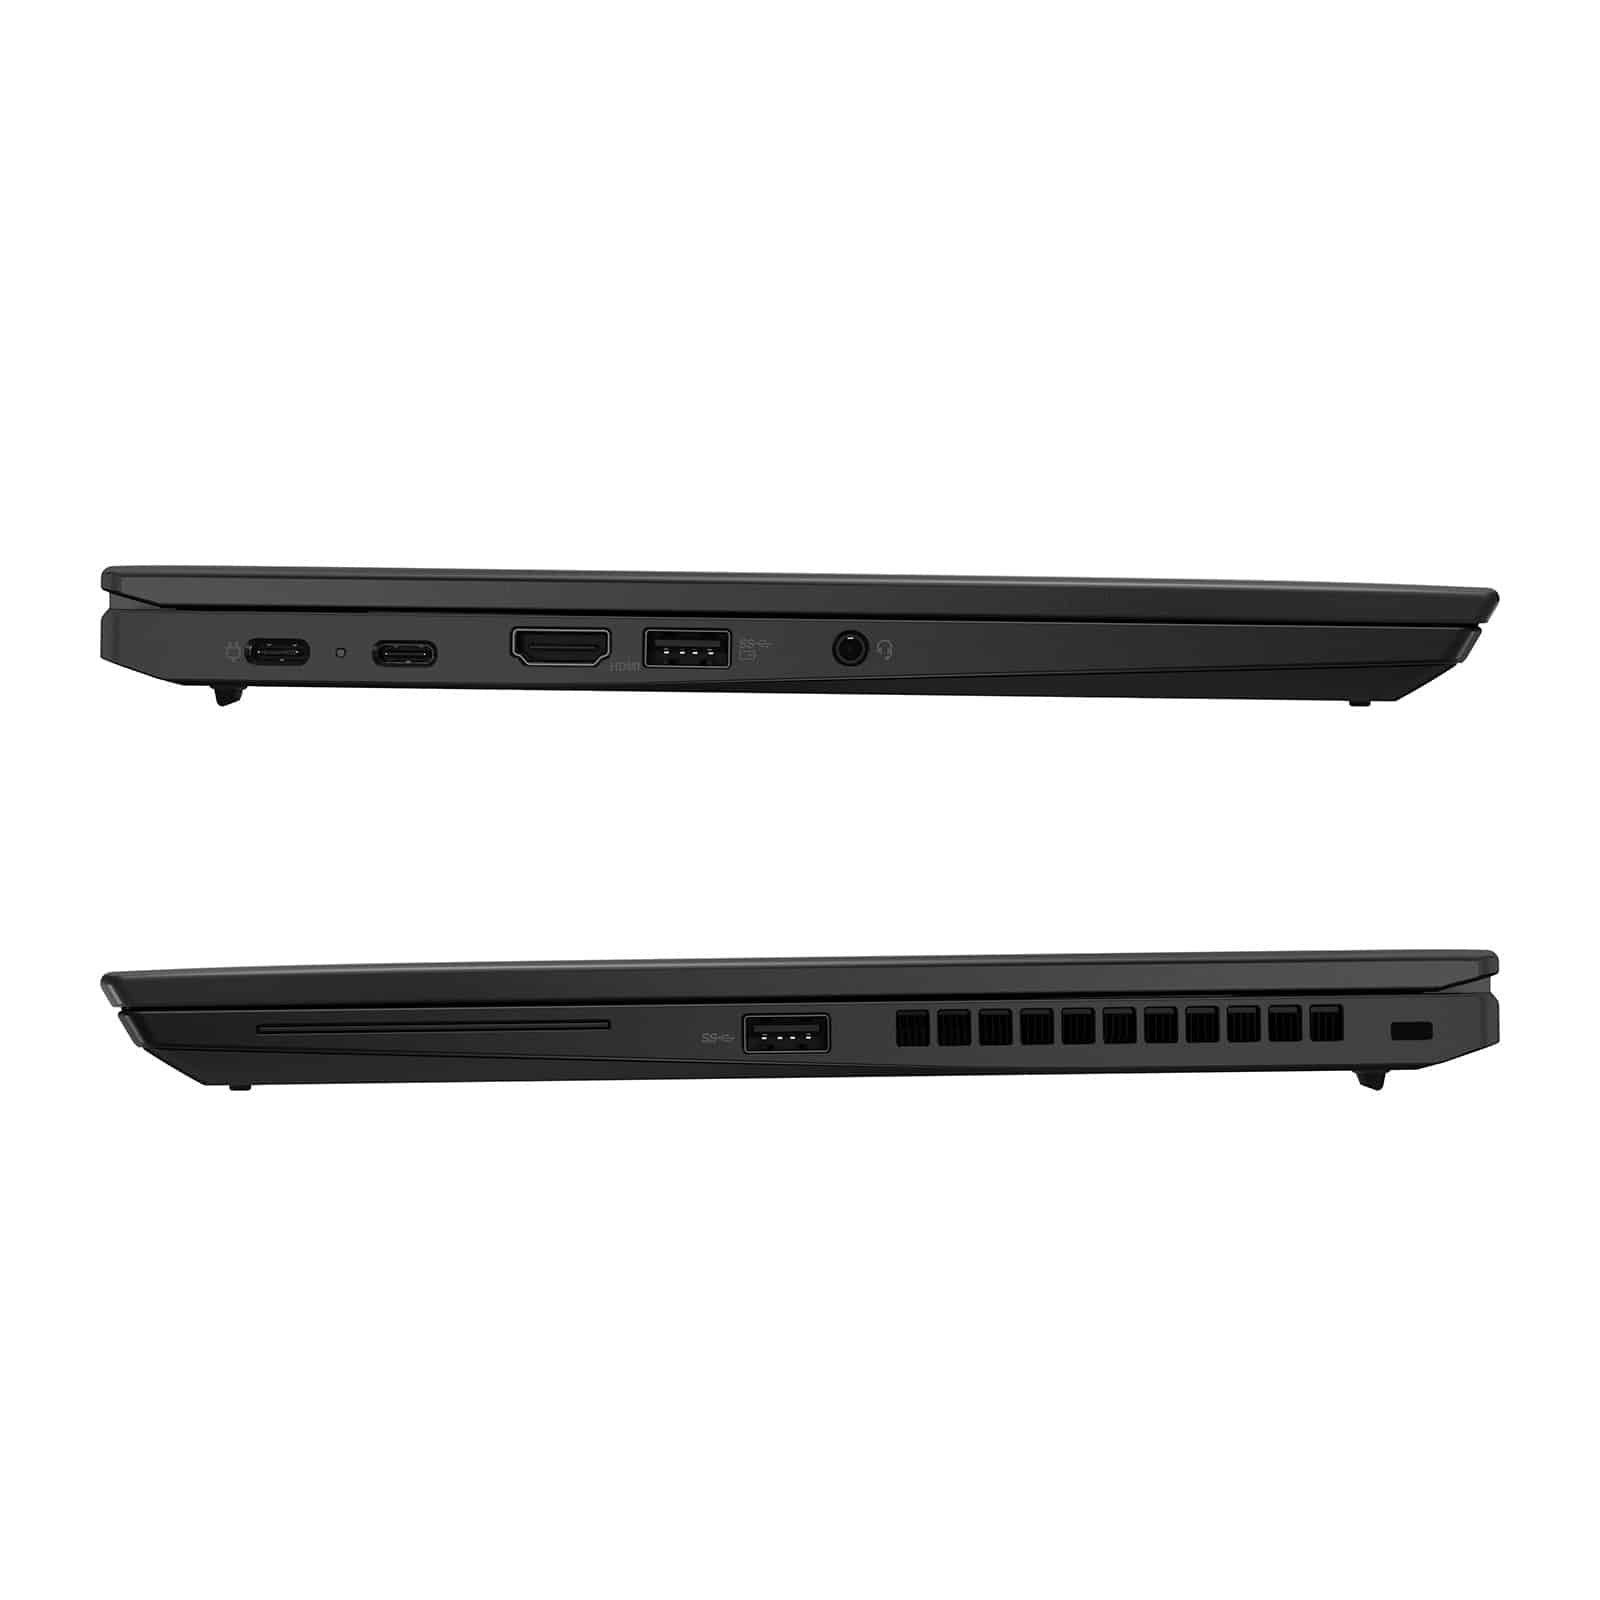 Lenovo ThinkPad X13 Gen 3 Thunder black